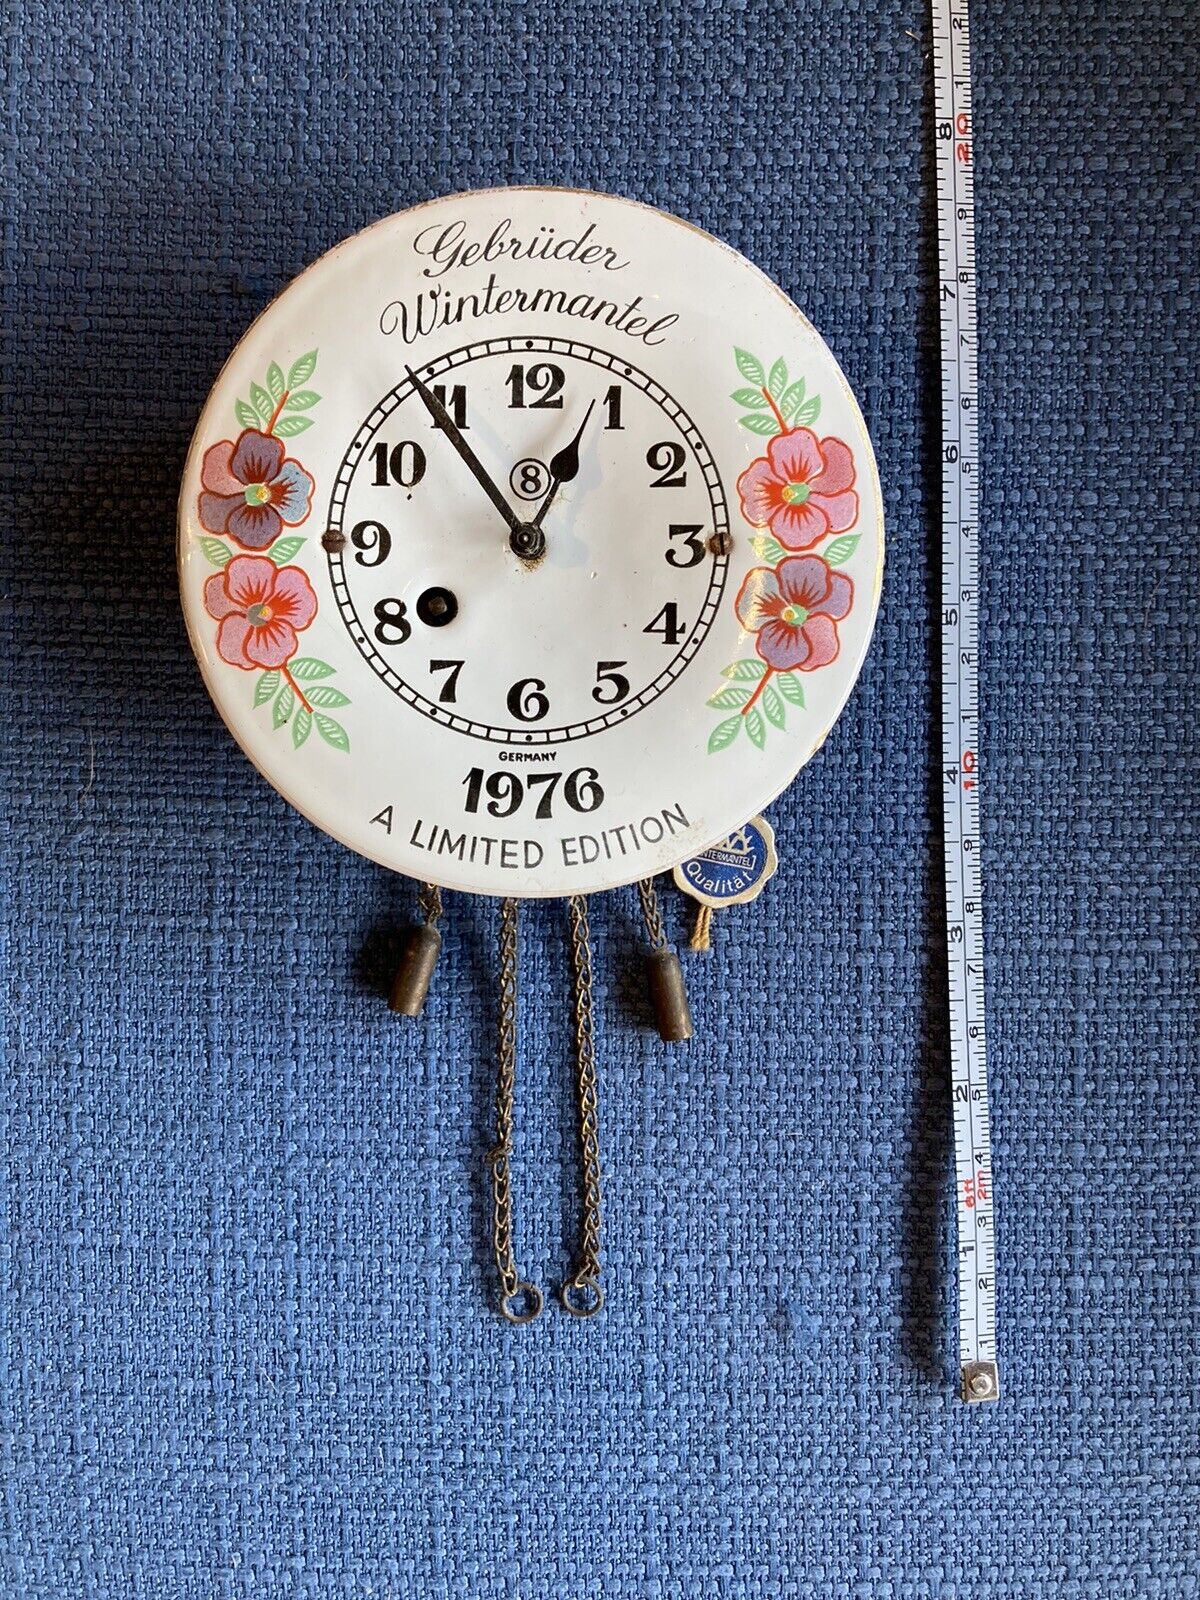 Vintage Gebruder WINTERMANTEL 1976 Limited Edition Clock Enamel Face